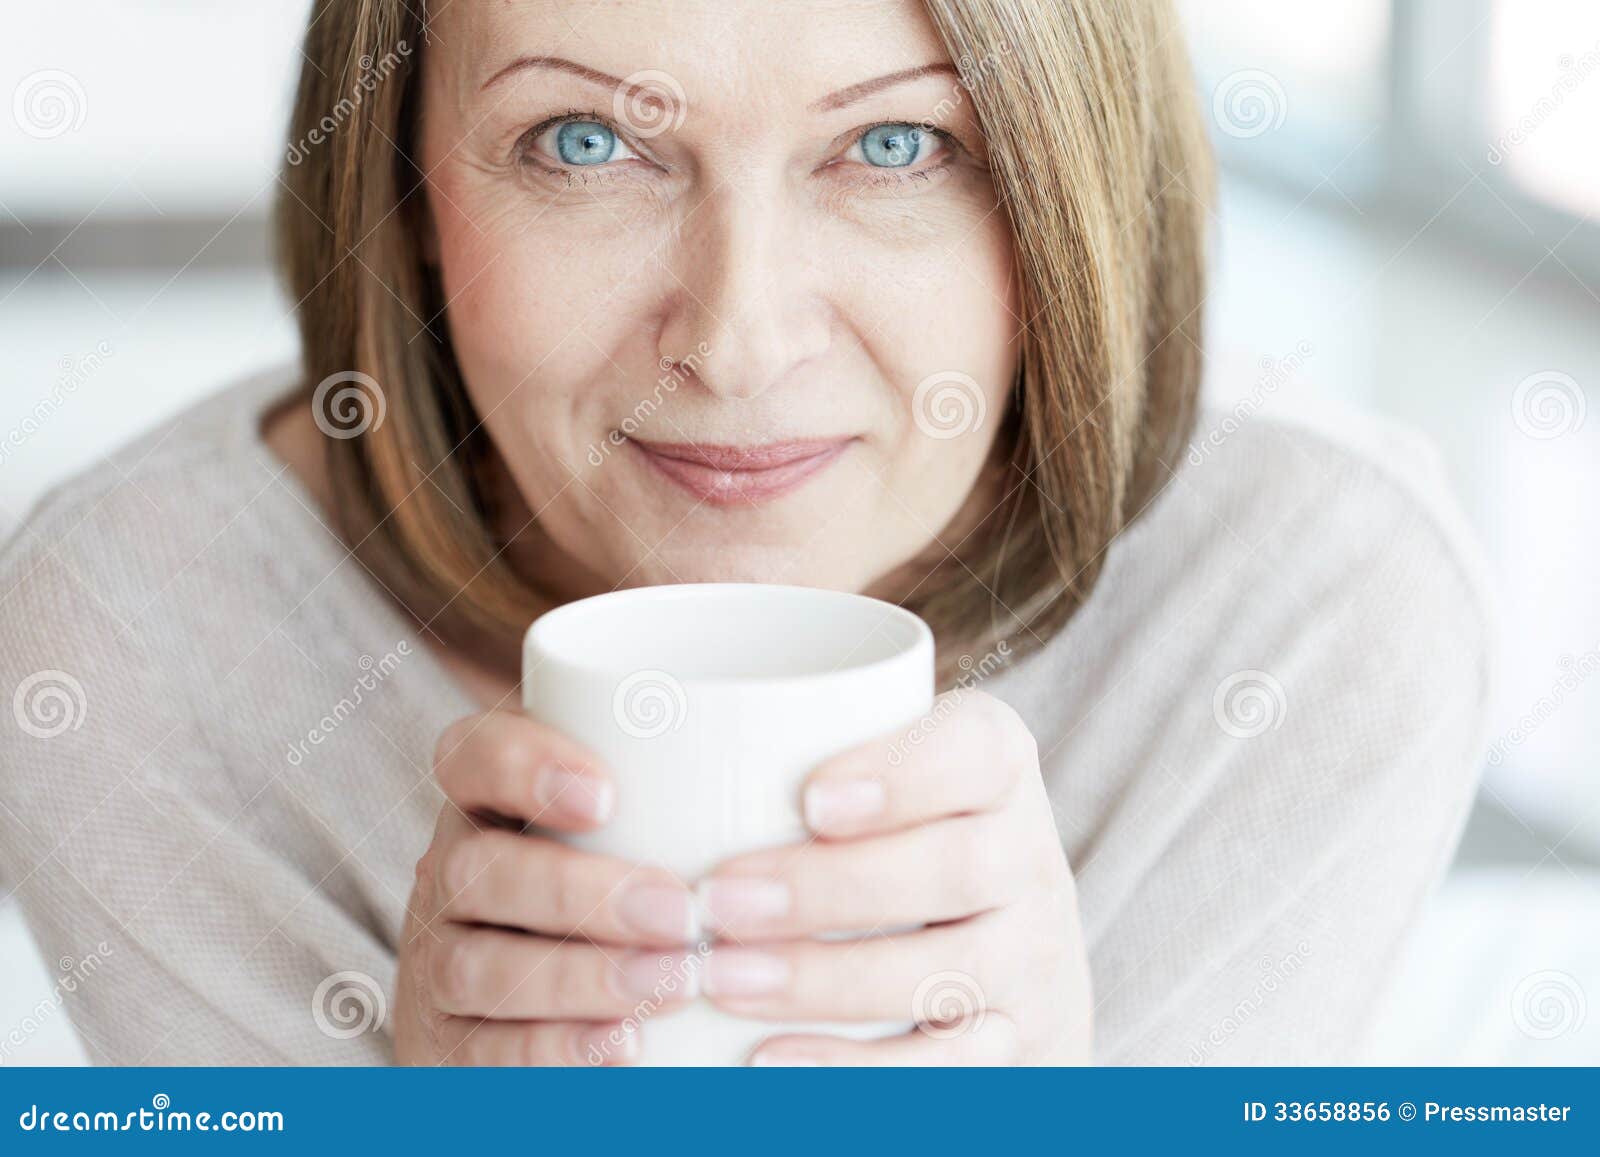 Mature d cup Mature Woman Stock Photo Image Of Aged Feminine Human 33658856